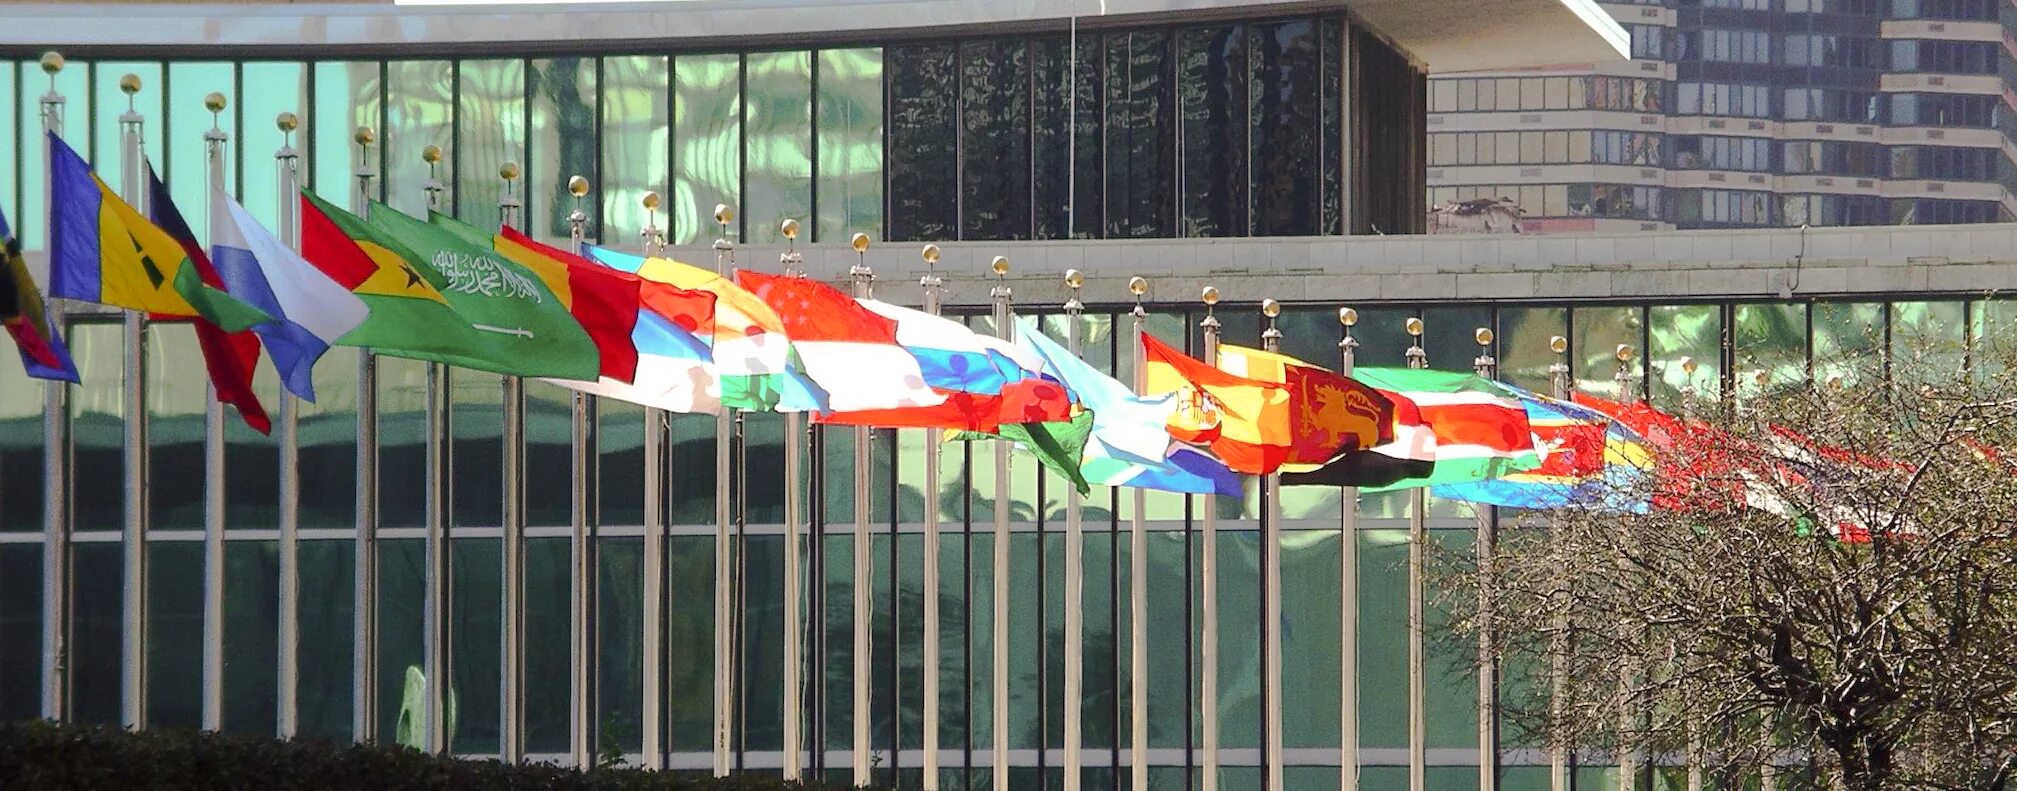 Около оон. Здание ООН В Нью-Йорке. Флаг на здании. Флаг ООН. Флаги у здания ООН.